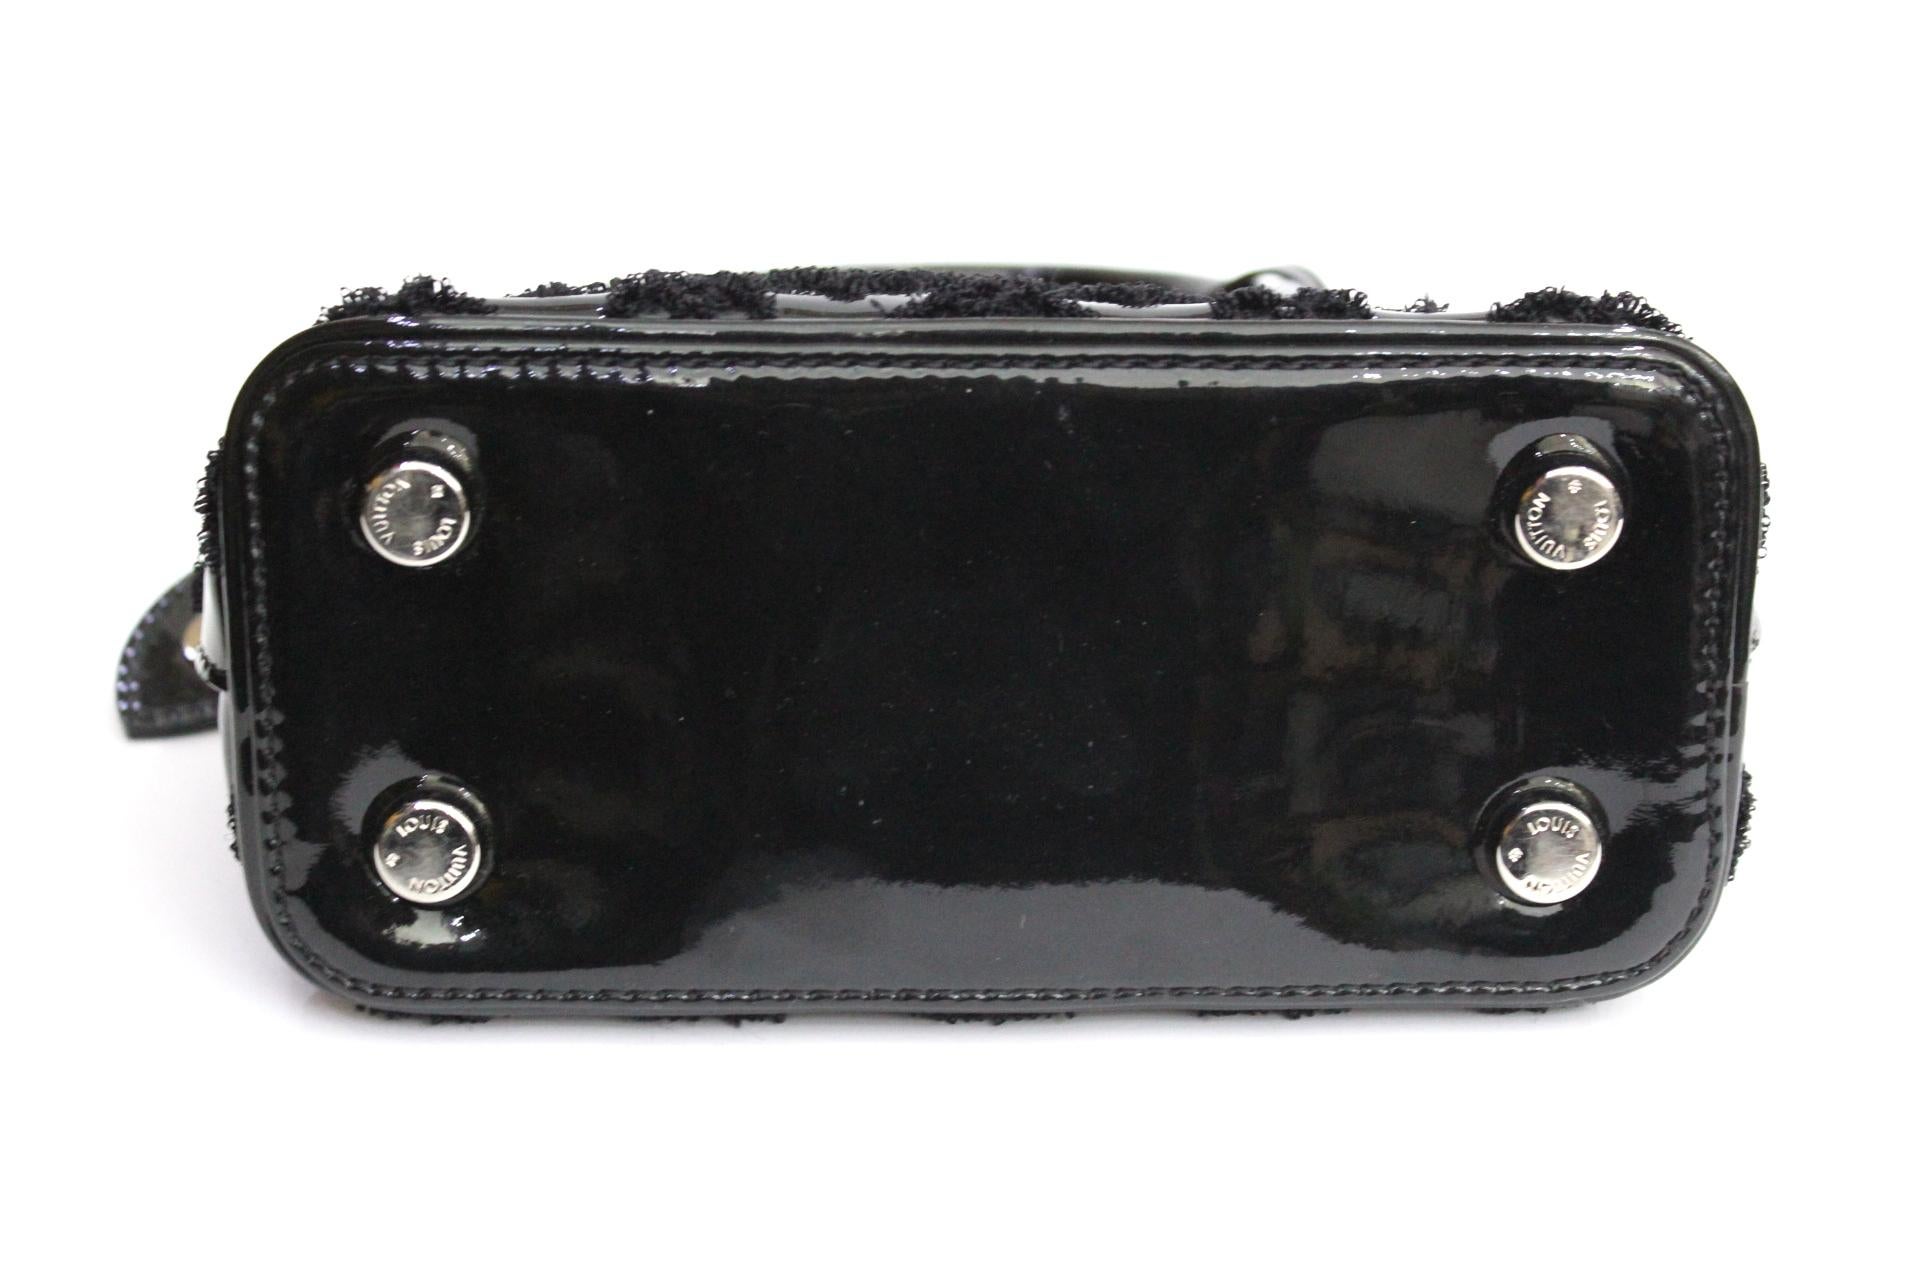 2012 Louis Vuitton Black Patent Leather Lockit Limeted Edition Bag 3